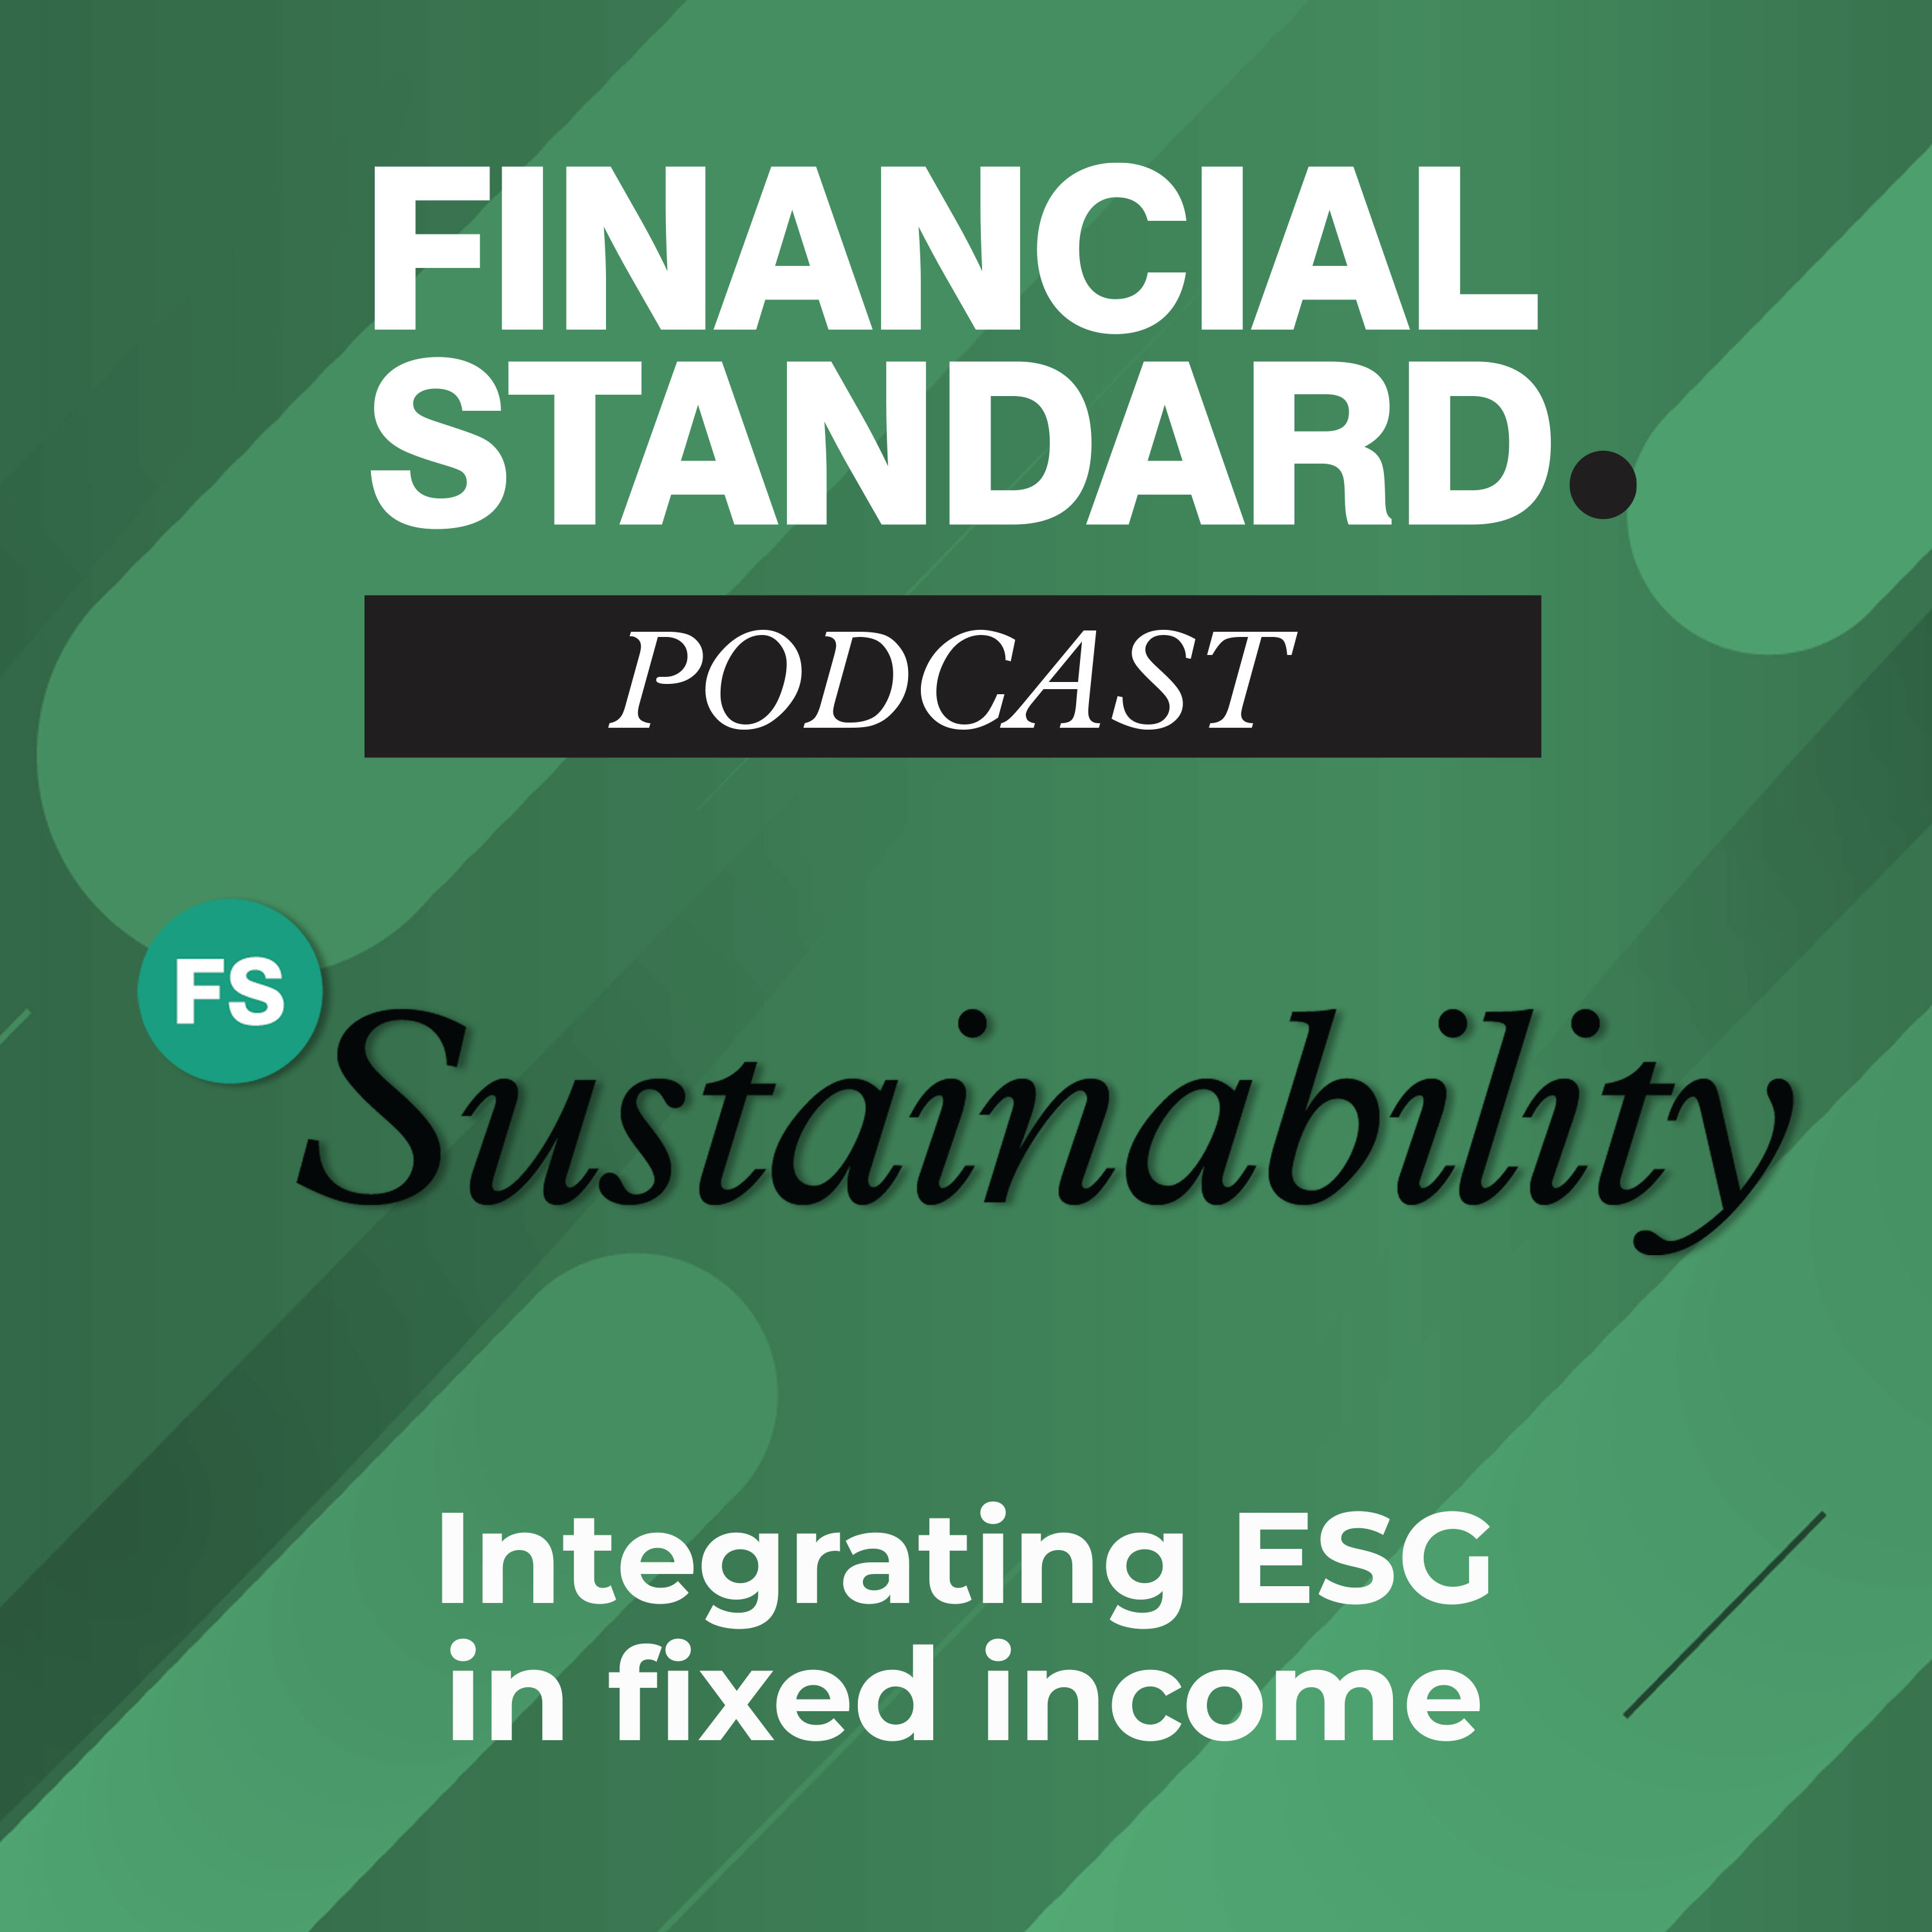 Artwork for podcast Financial Standard Podcast